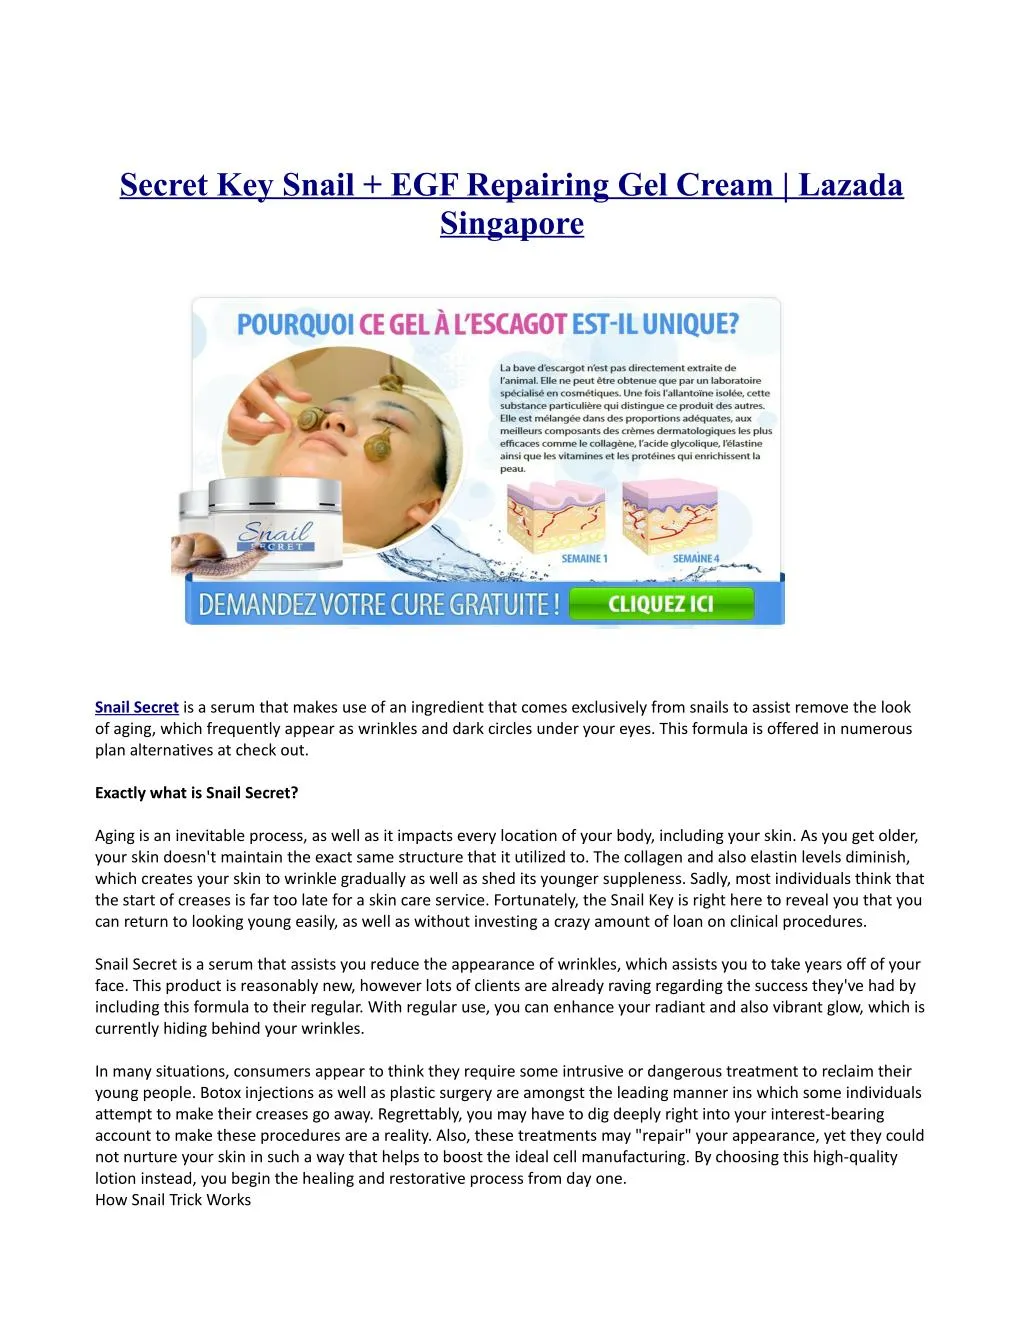 secret key snail egf repairing gel cream lazada